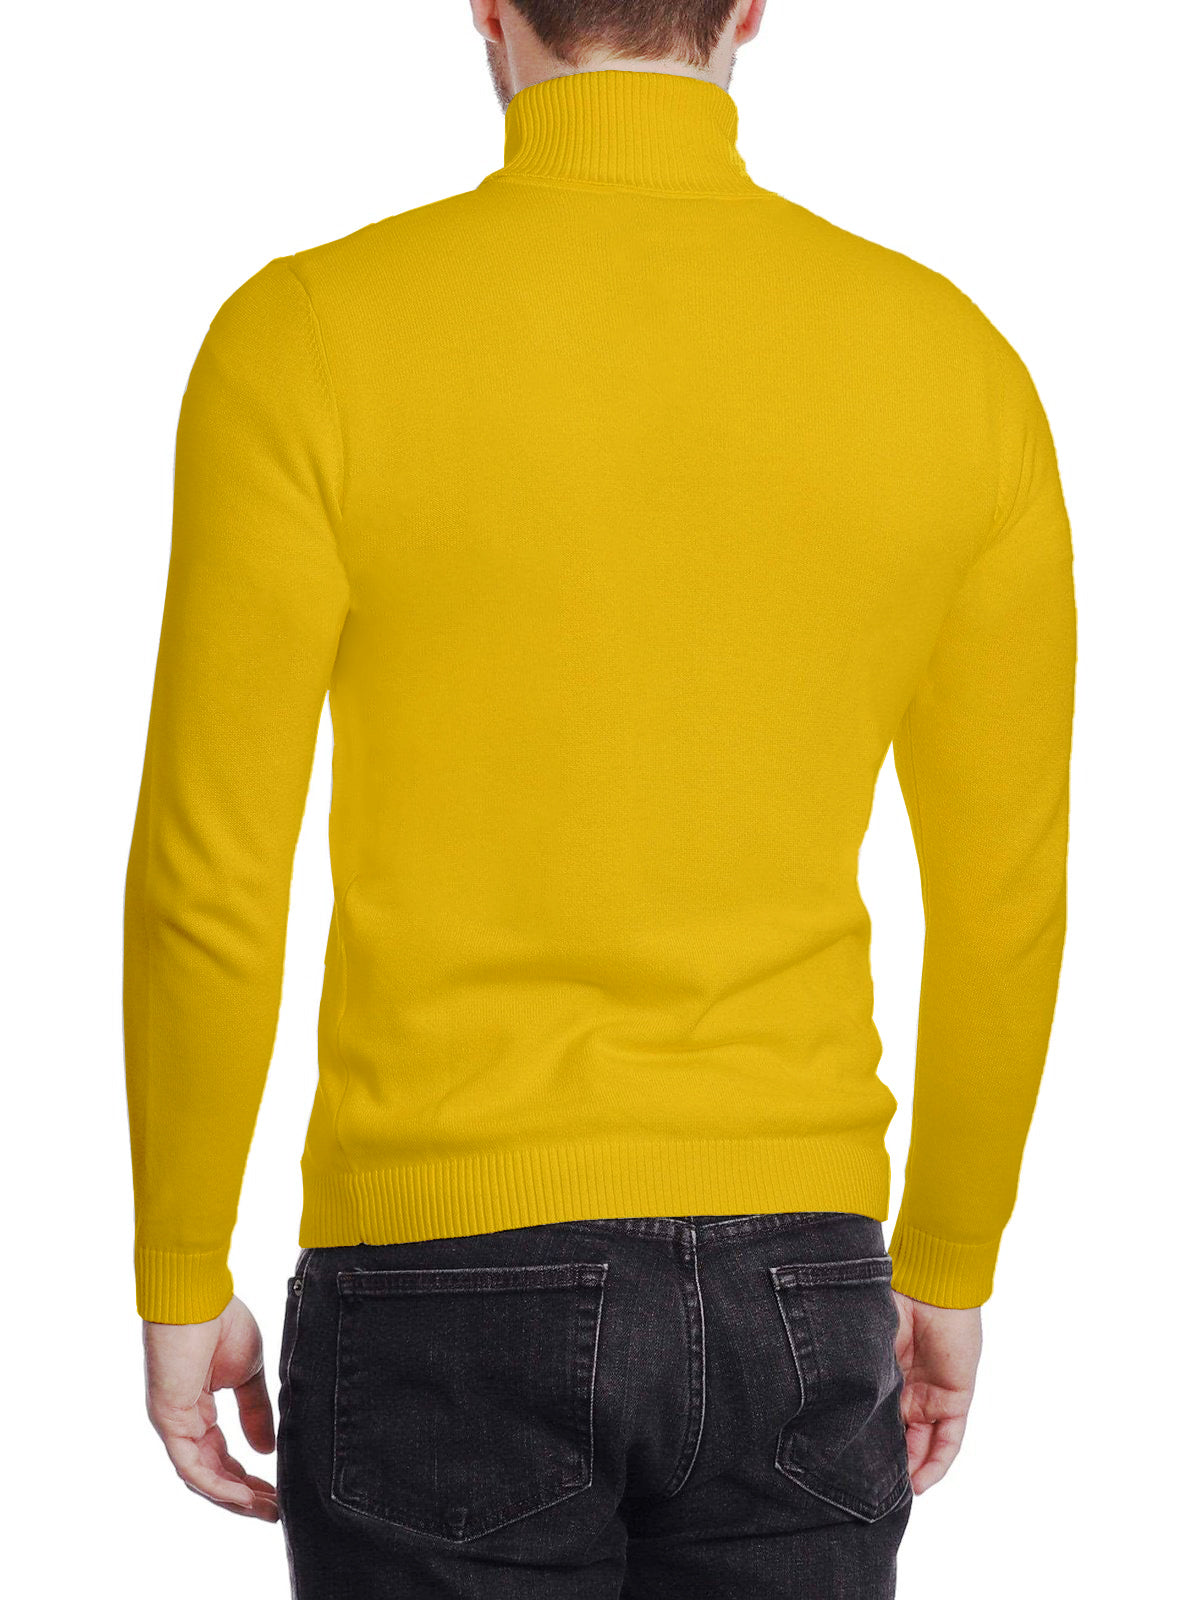 Arthur Black Men's Solid Yellow Pullover Cotton Blend Turtleneck Sweater Shirt